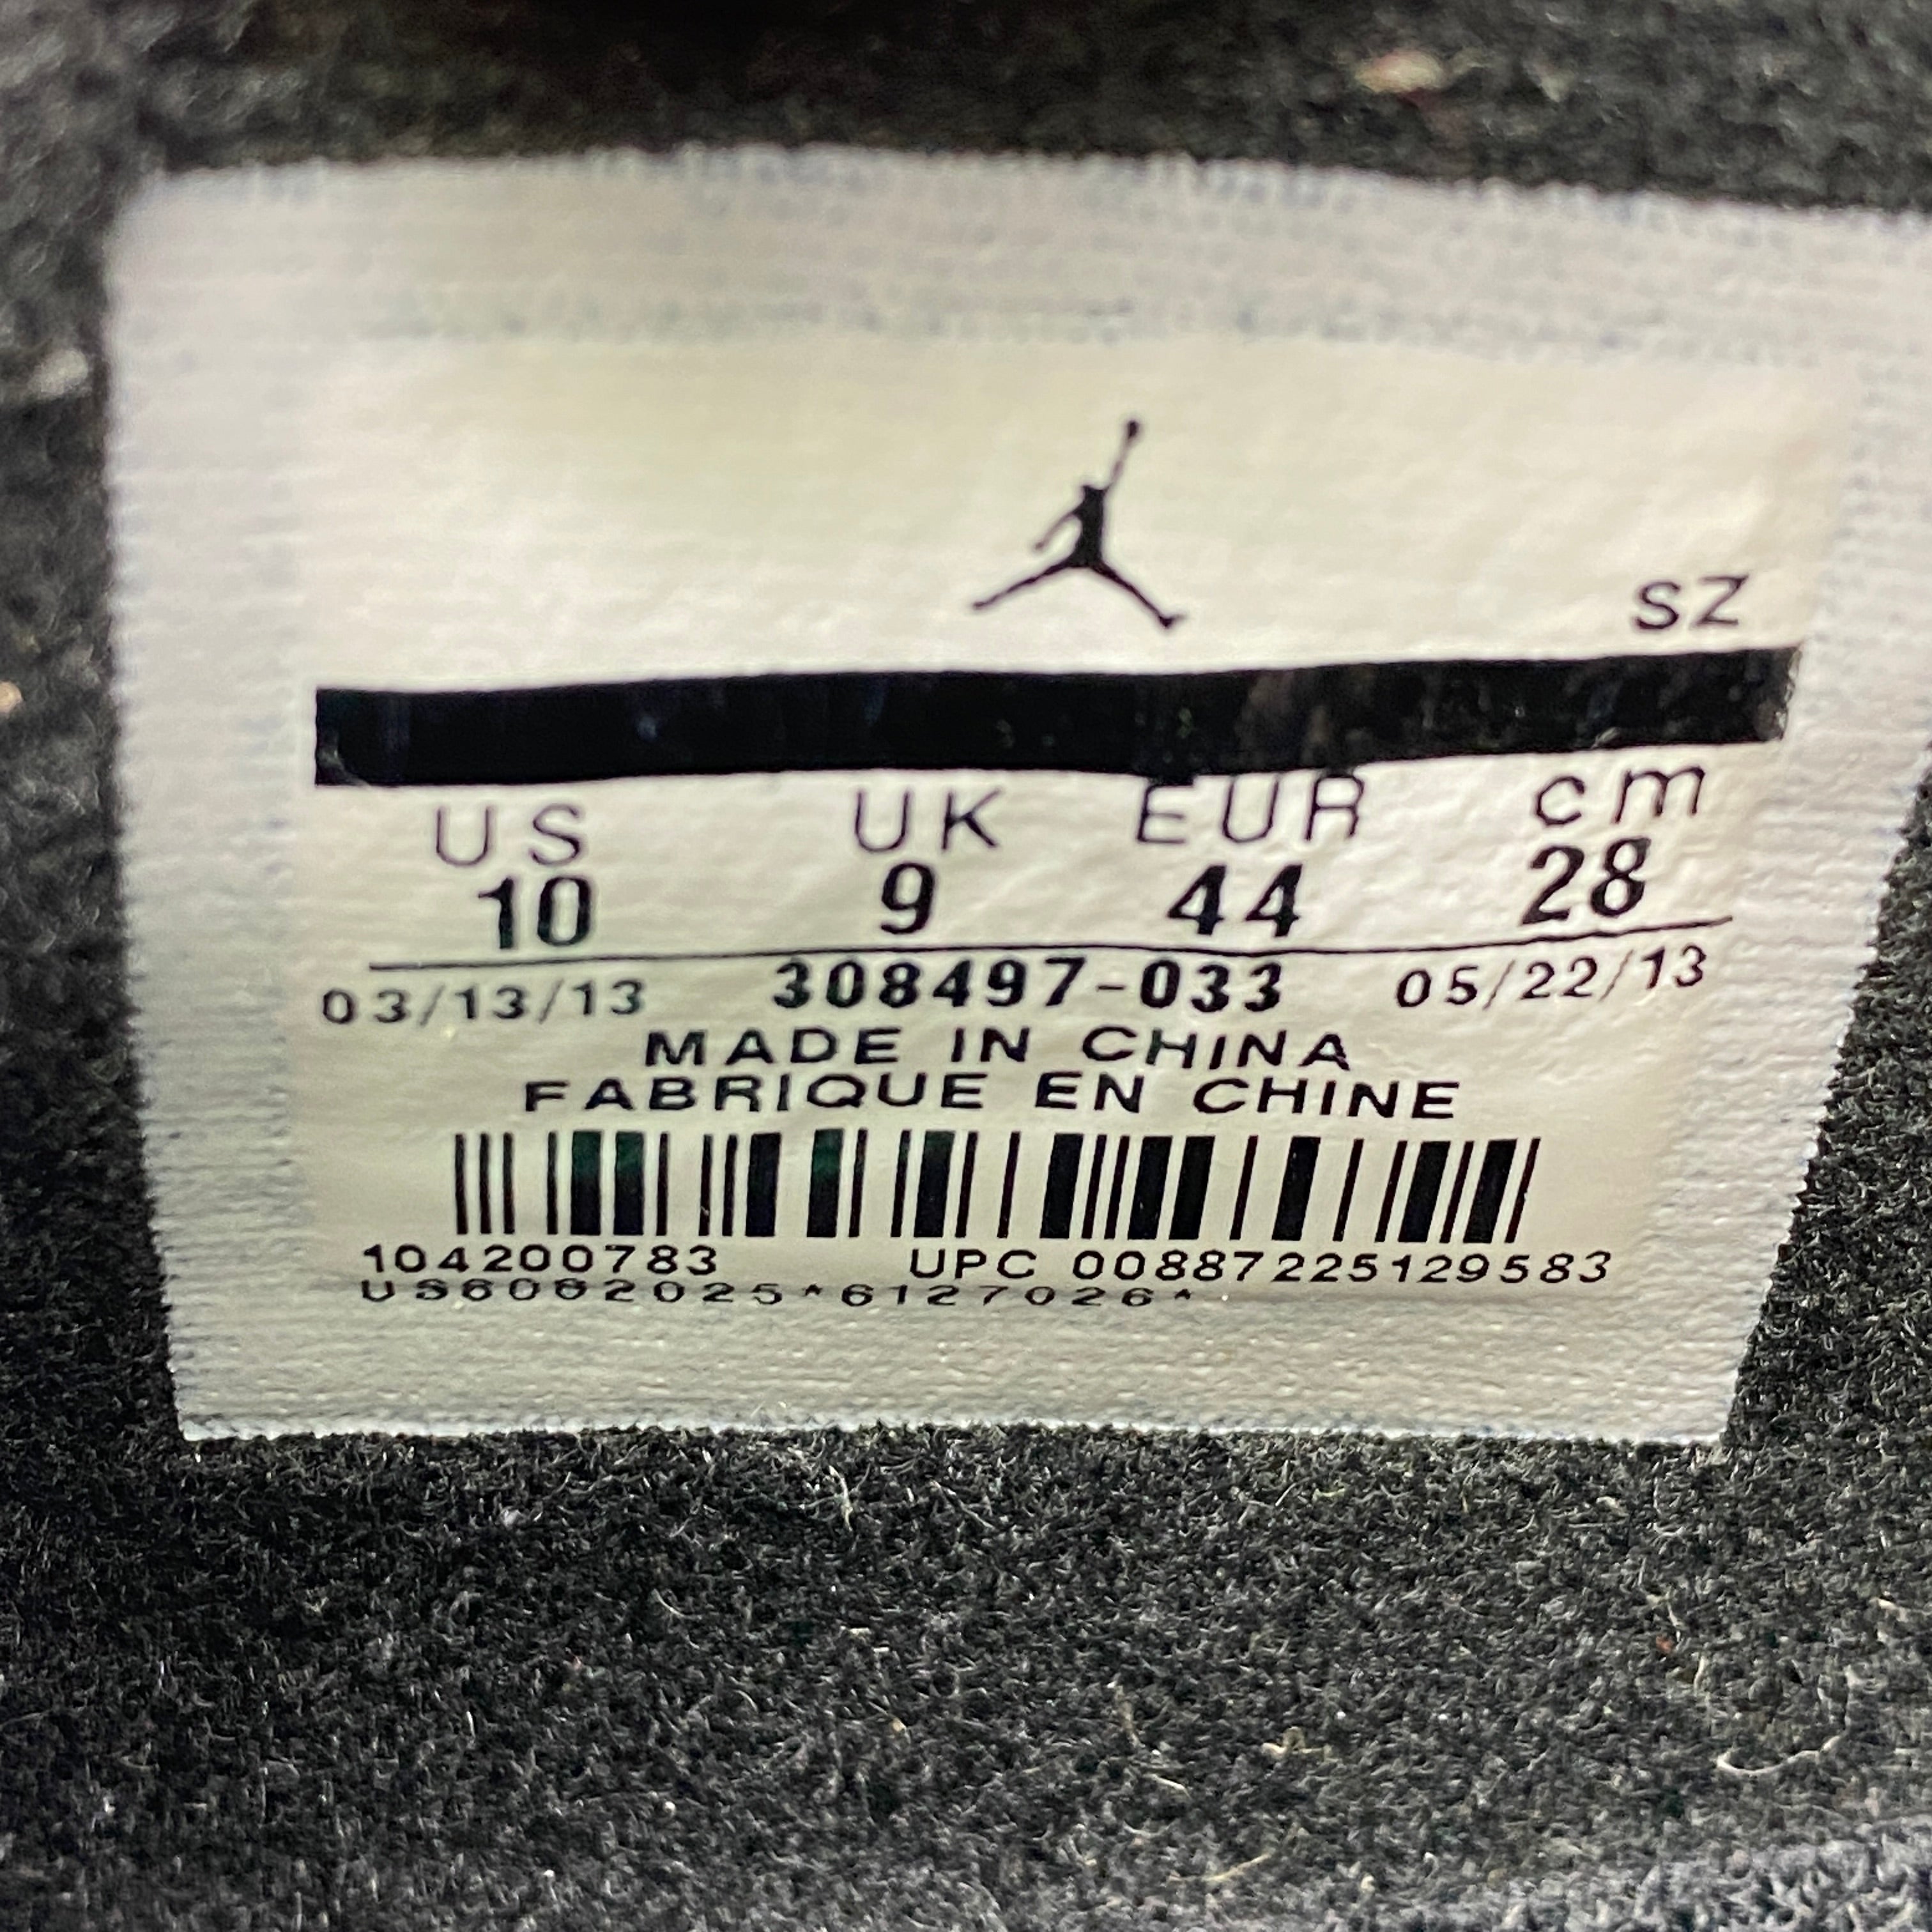 Air Jordan 4 Retro &quot;Green Glow&quot; 2013 Used Size 10